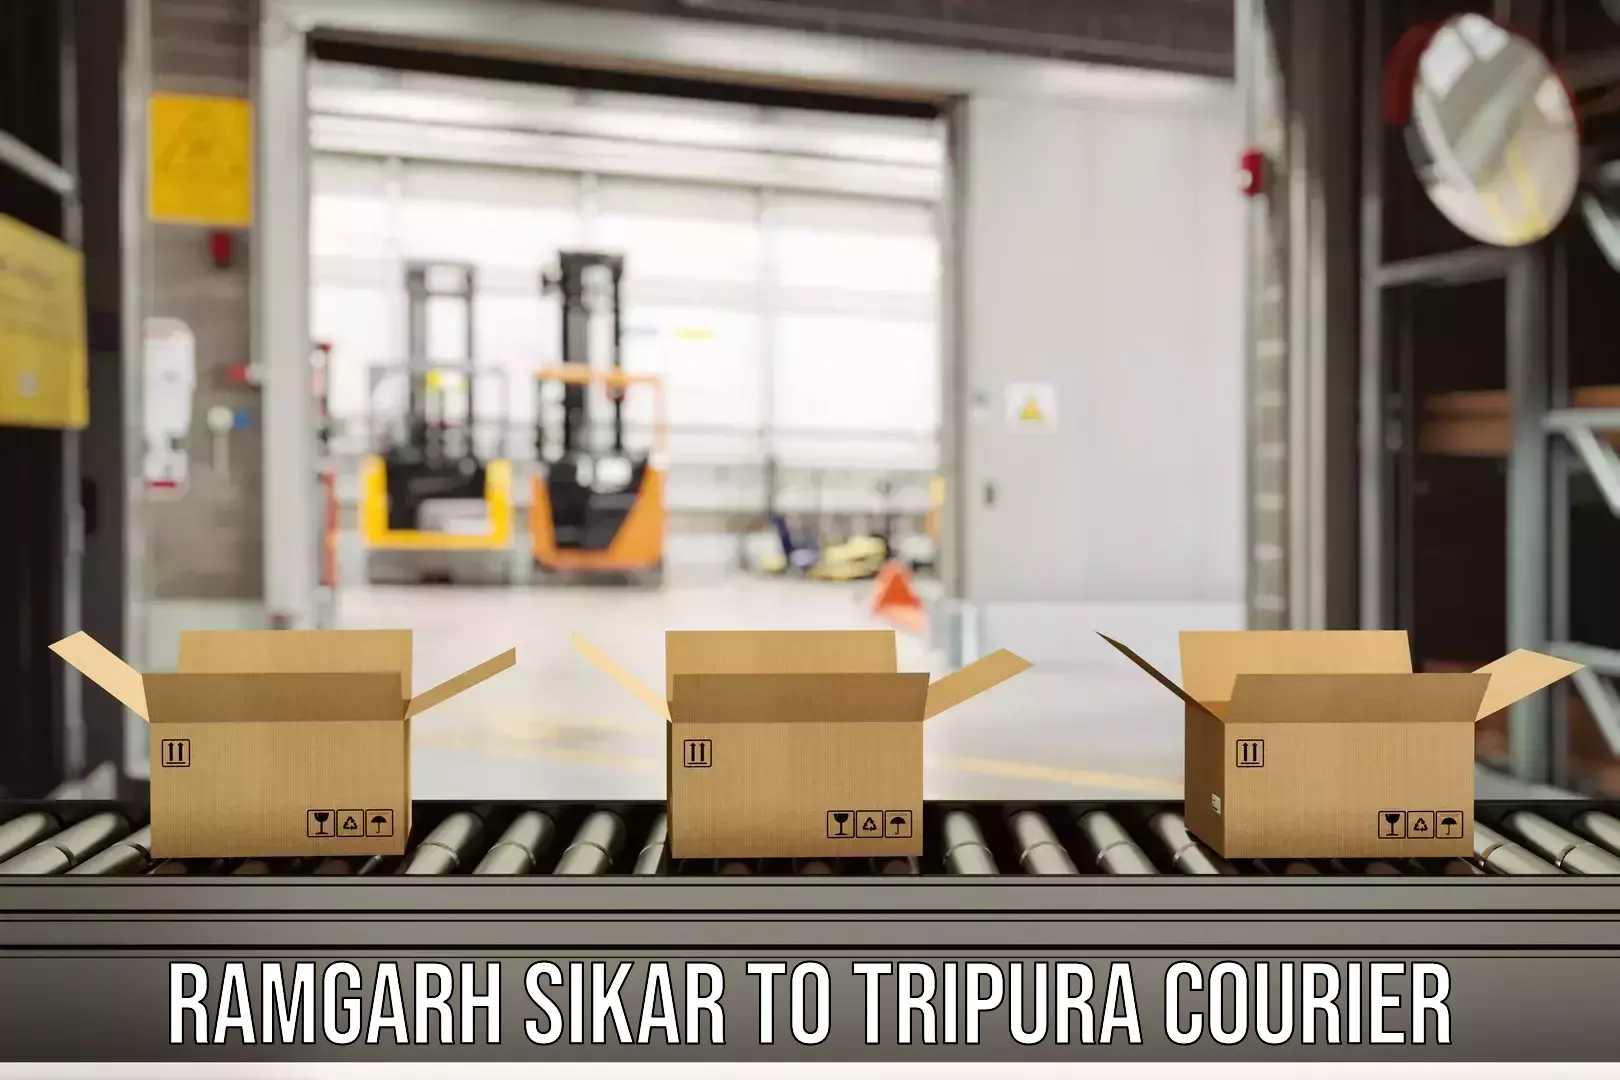 Efficient shipping platforms Ramgarh Sikar to Tripura